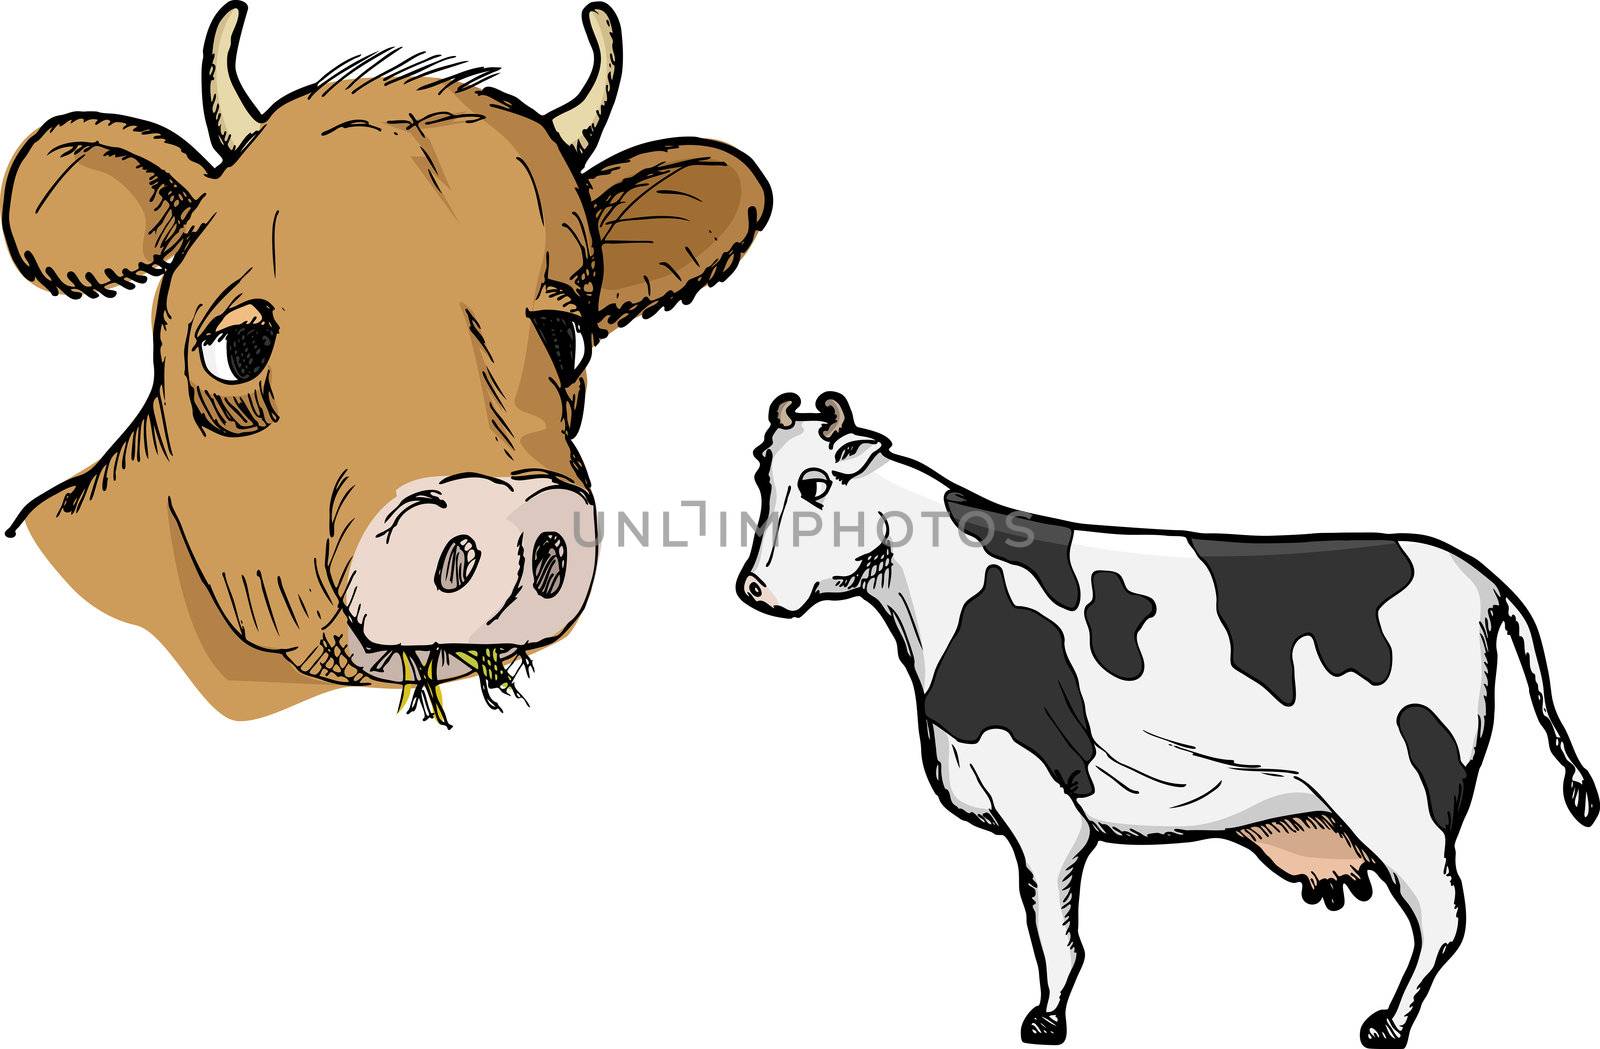 Cow Profile by TheBlackRhino